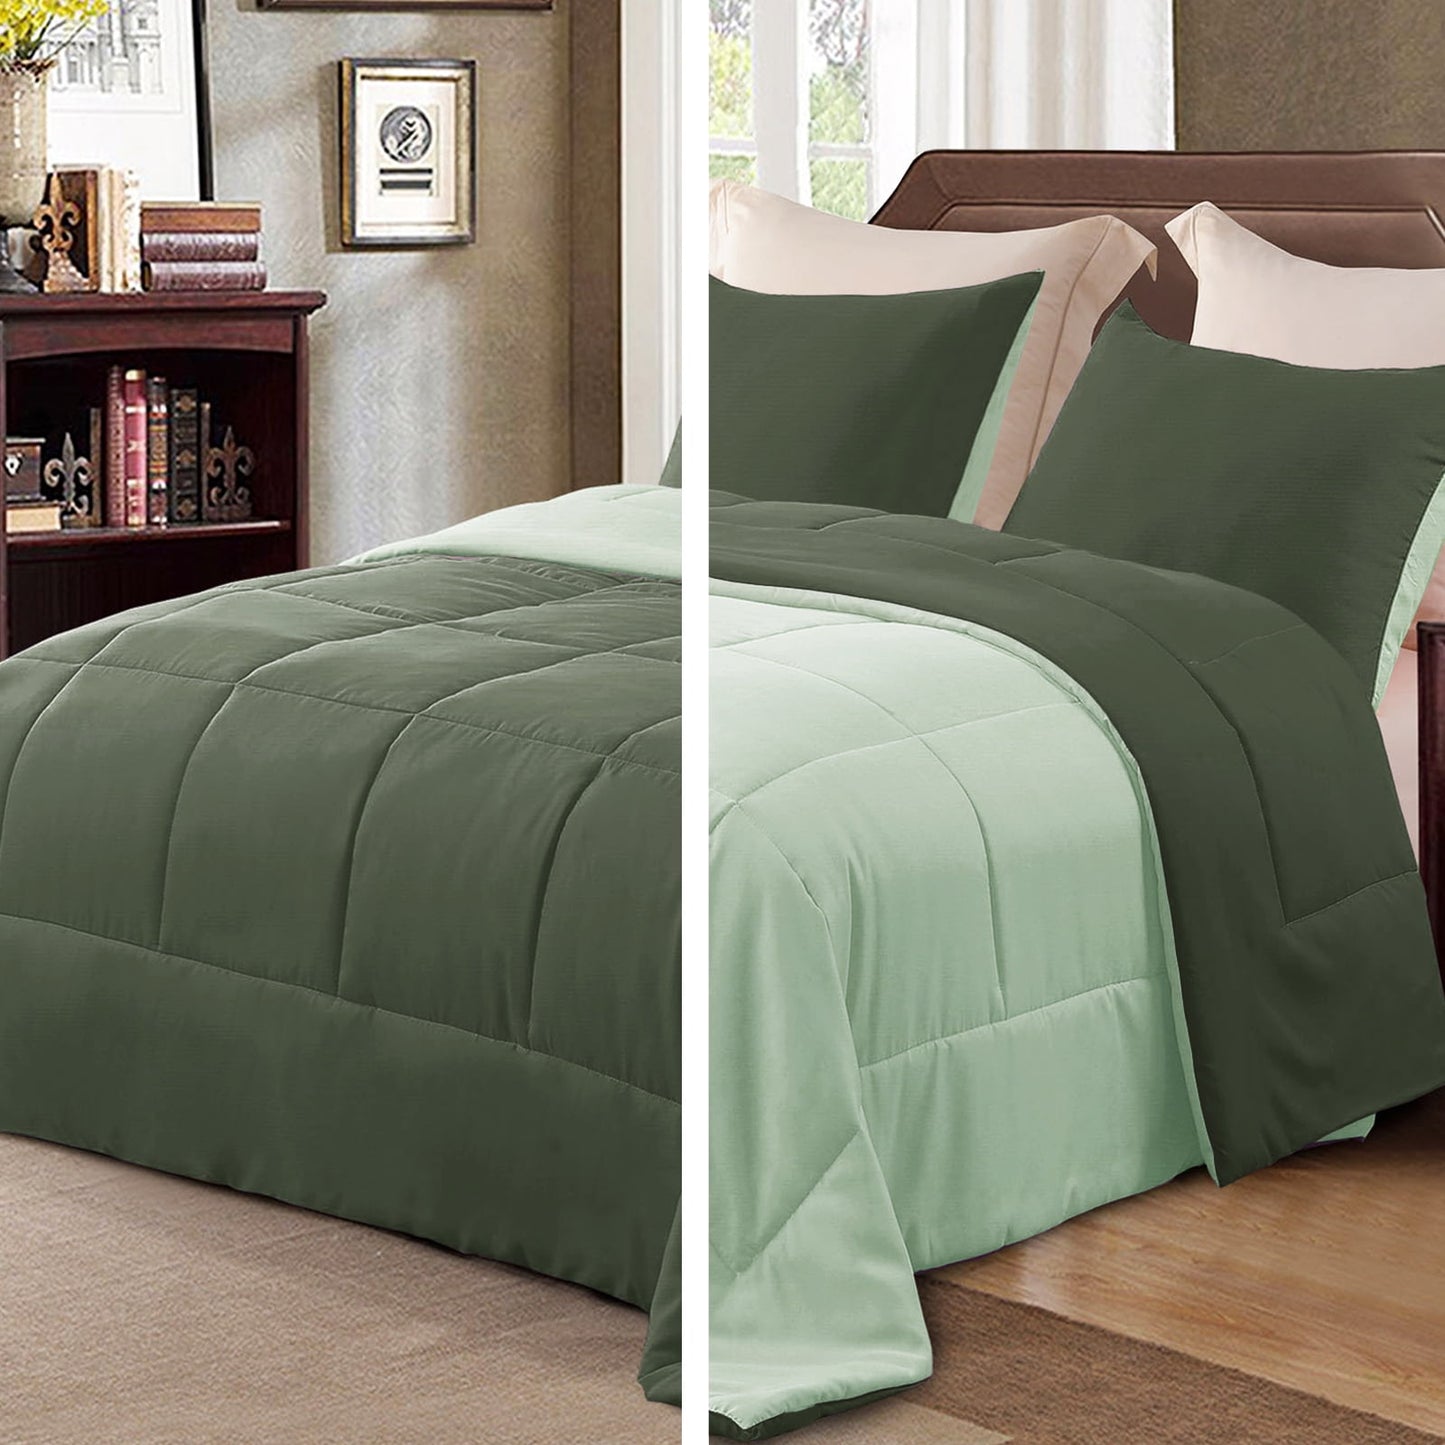 Exclusivo Mezcla Lightweight Reversible 2-Piece Comforter Set All Seasons, Down Alternative Comforter with 1 Pillow Sham, Twin Size, Emerald/Mint